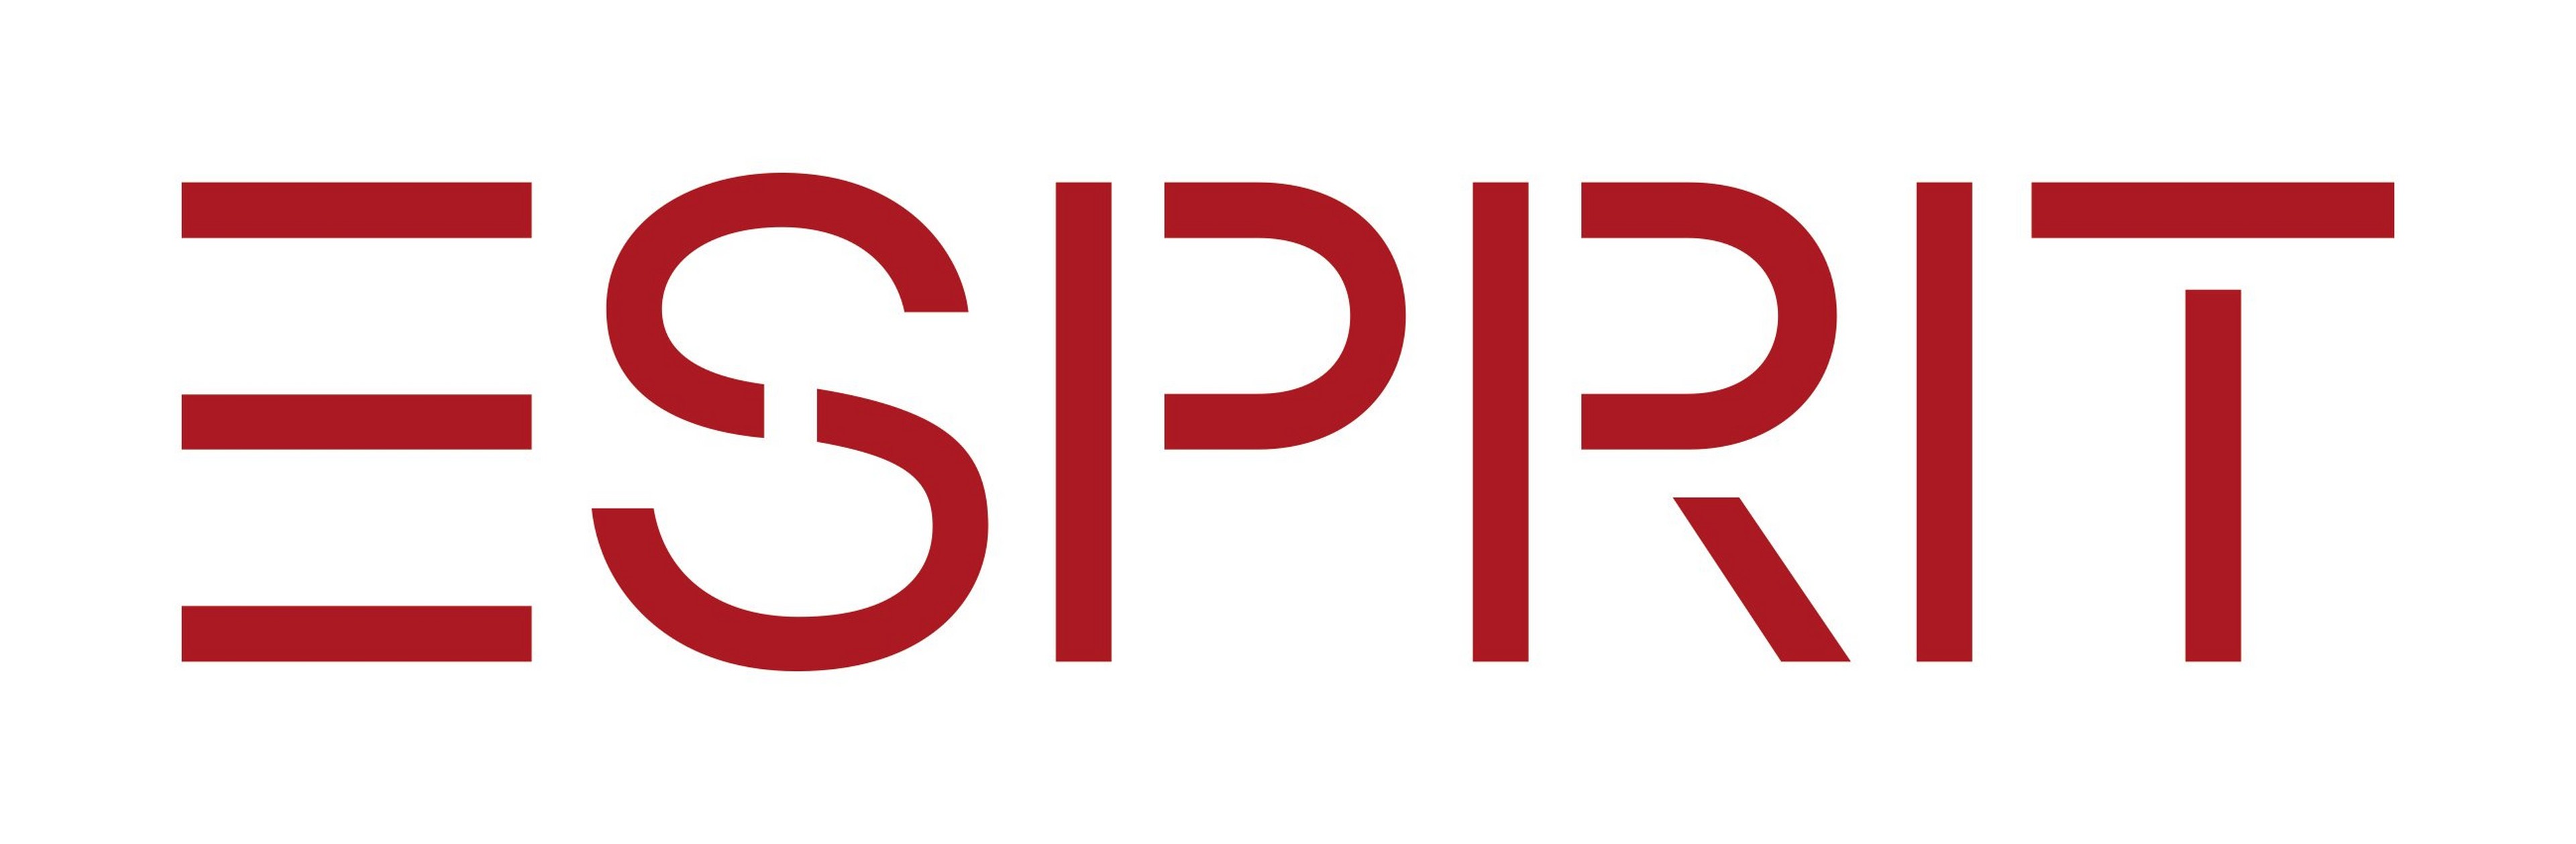 Esprit logotype